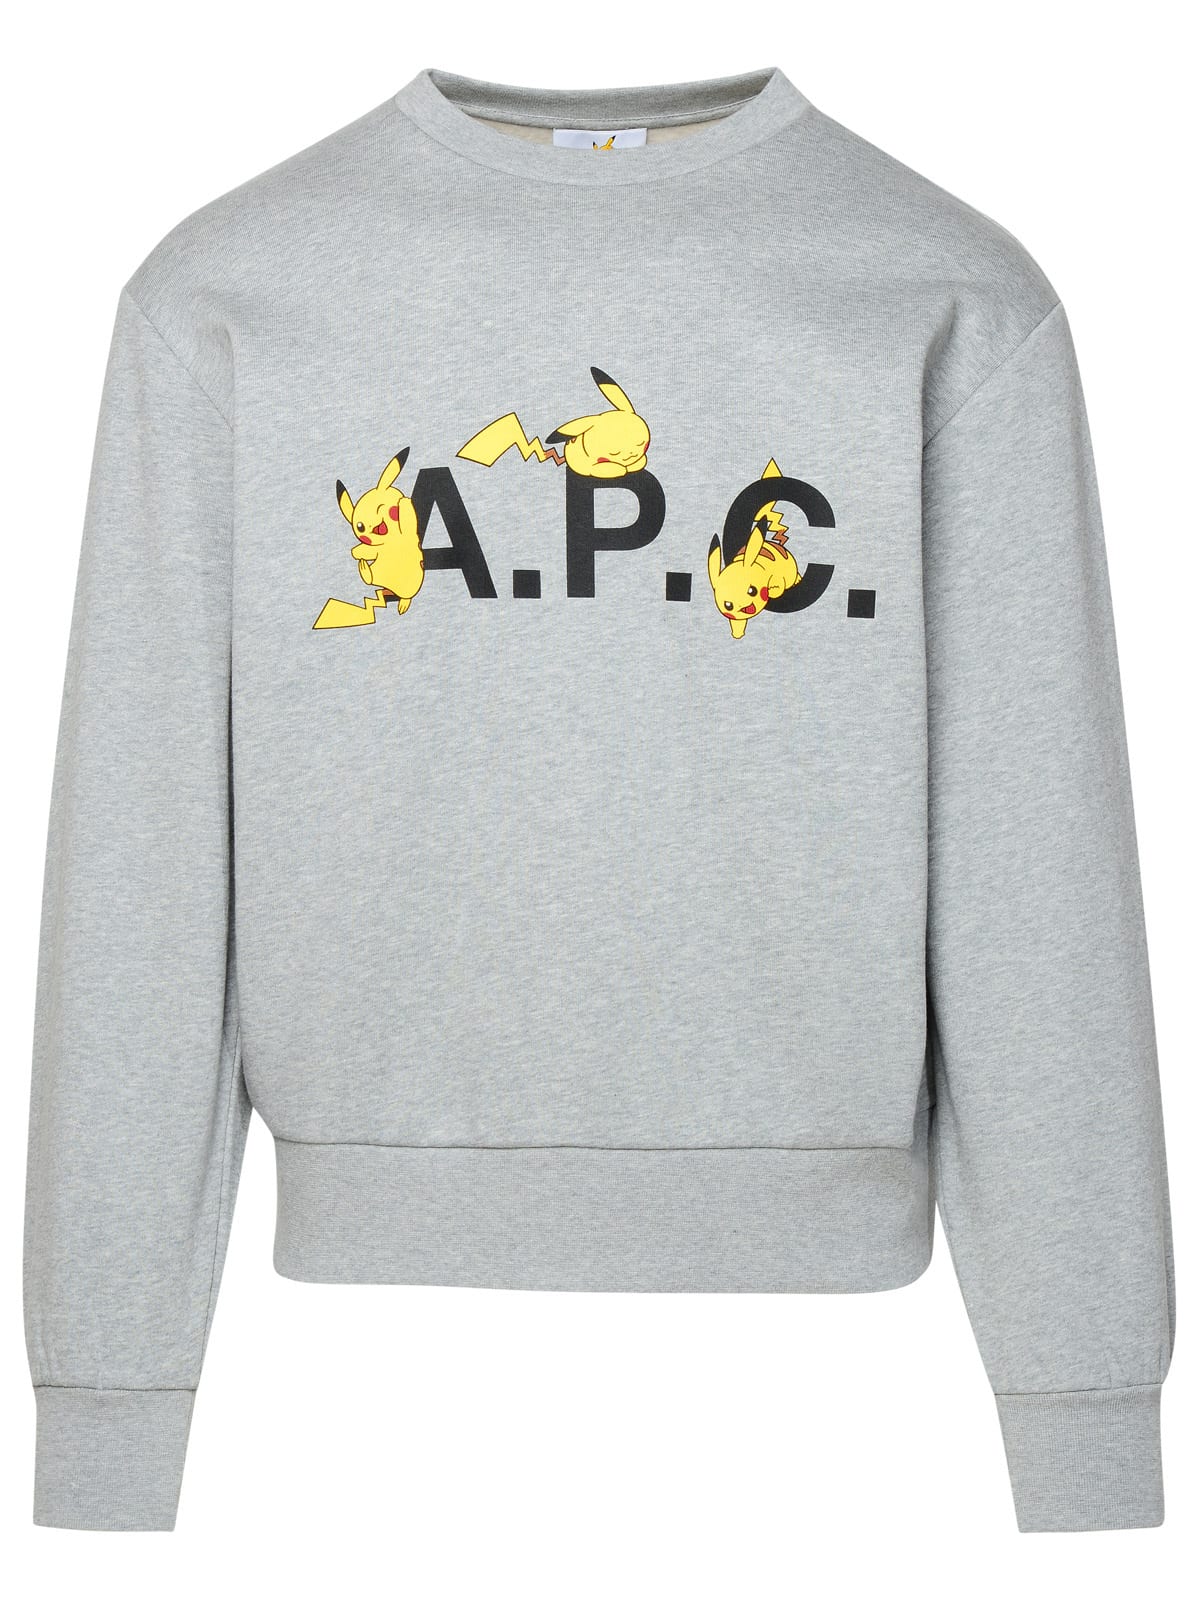 Shop Apc Pokémon Pikachu Grey Cotton Sweatshirt